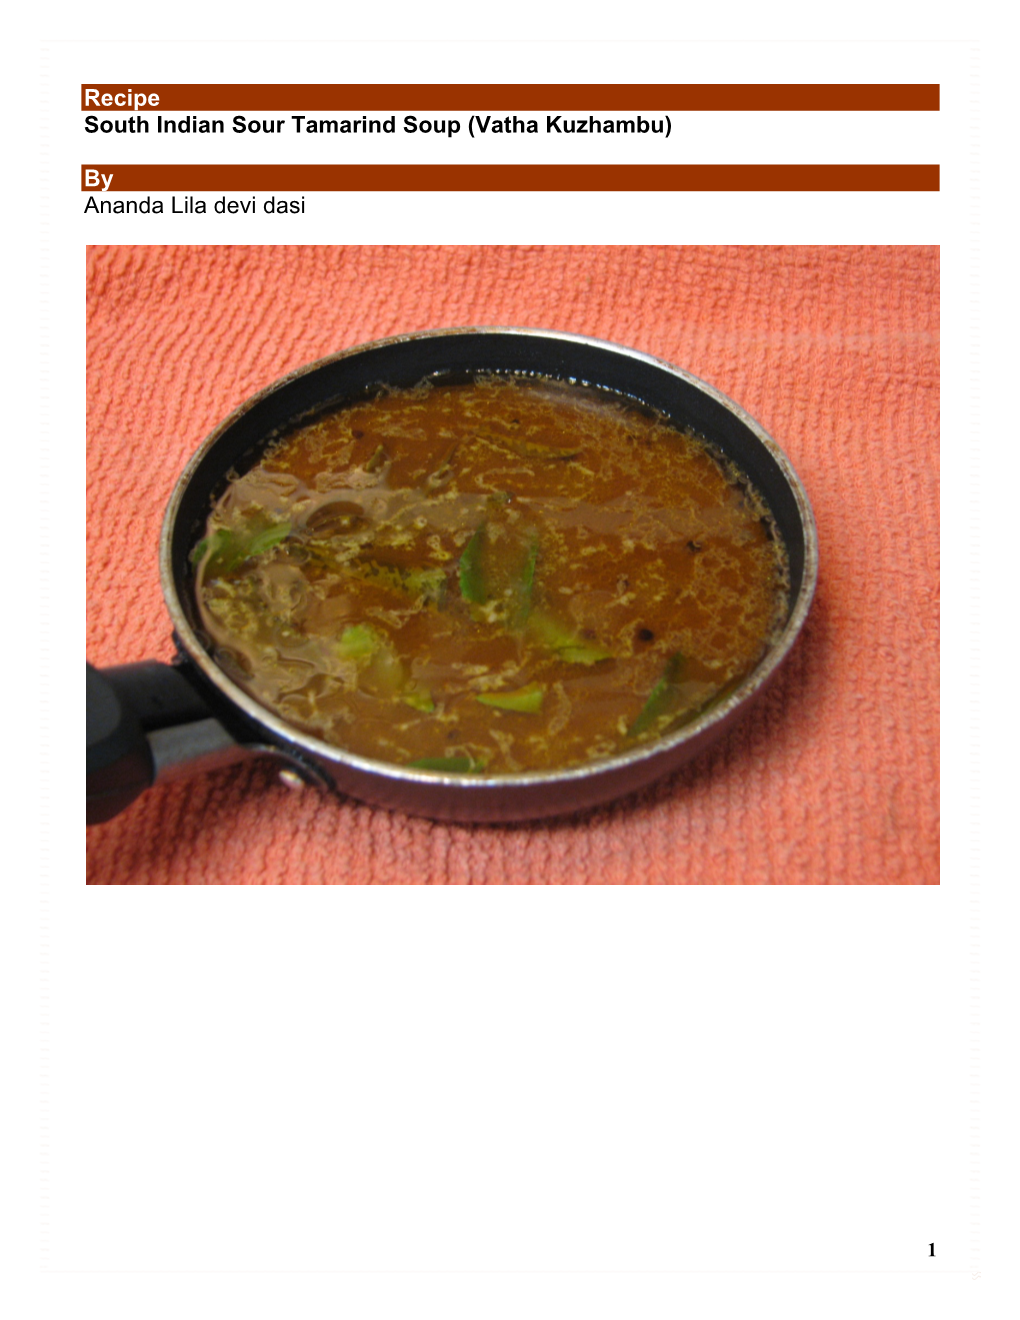 Recipe South Indian Sour Tamarind Soup (Vatha Kuzhambu) By